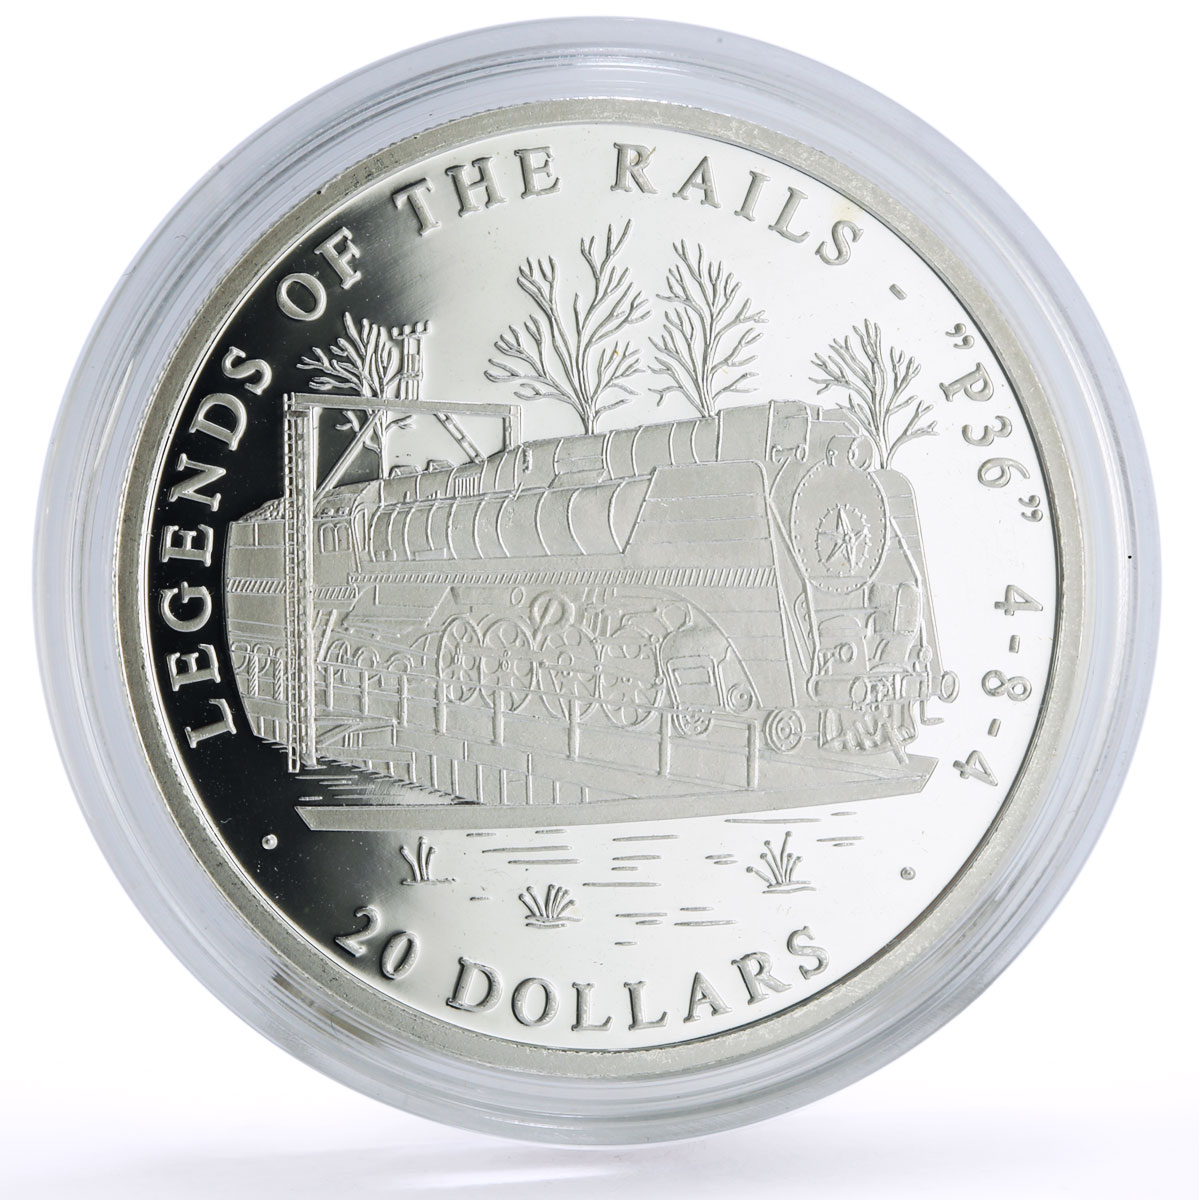 Liberia 20 dollars Railways Railroads Trains P46 484 proof silver coin 2002